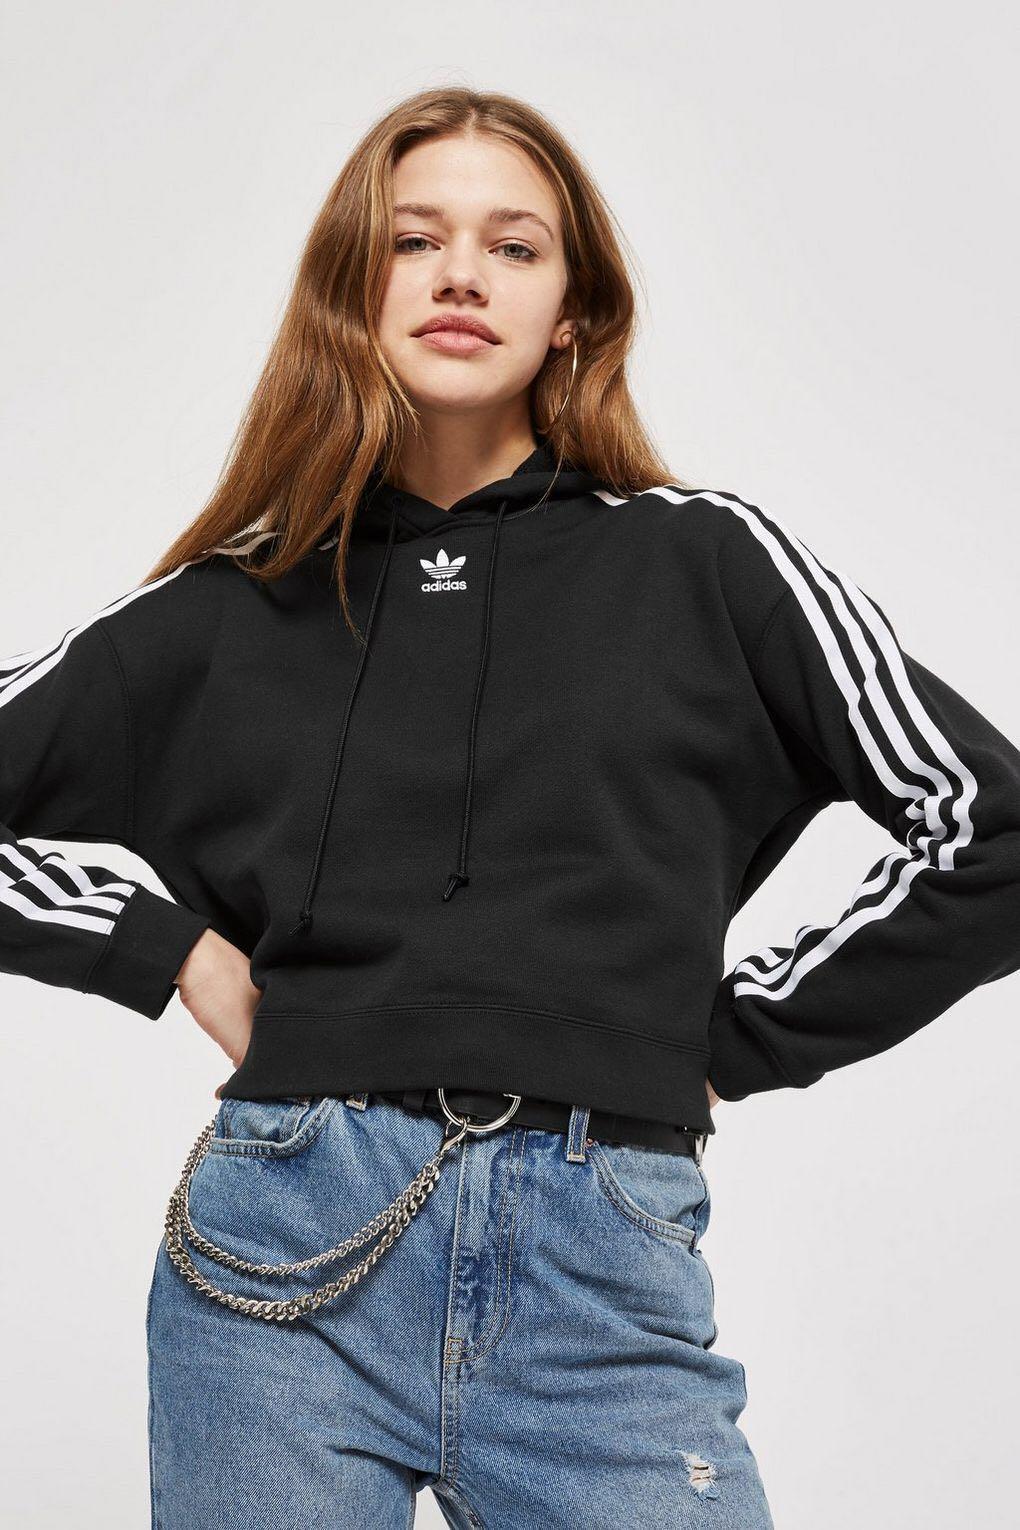 Adidas black cropped hoodie, Women's 